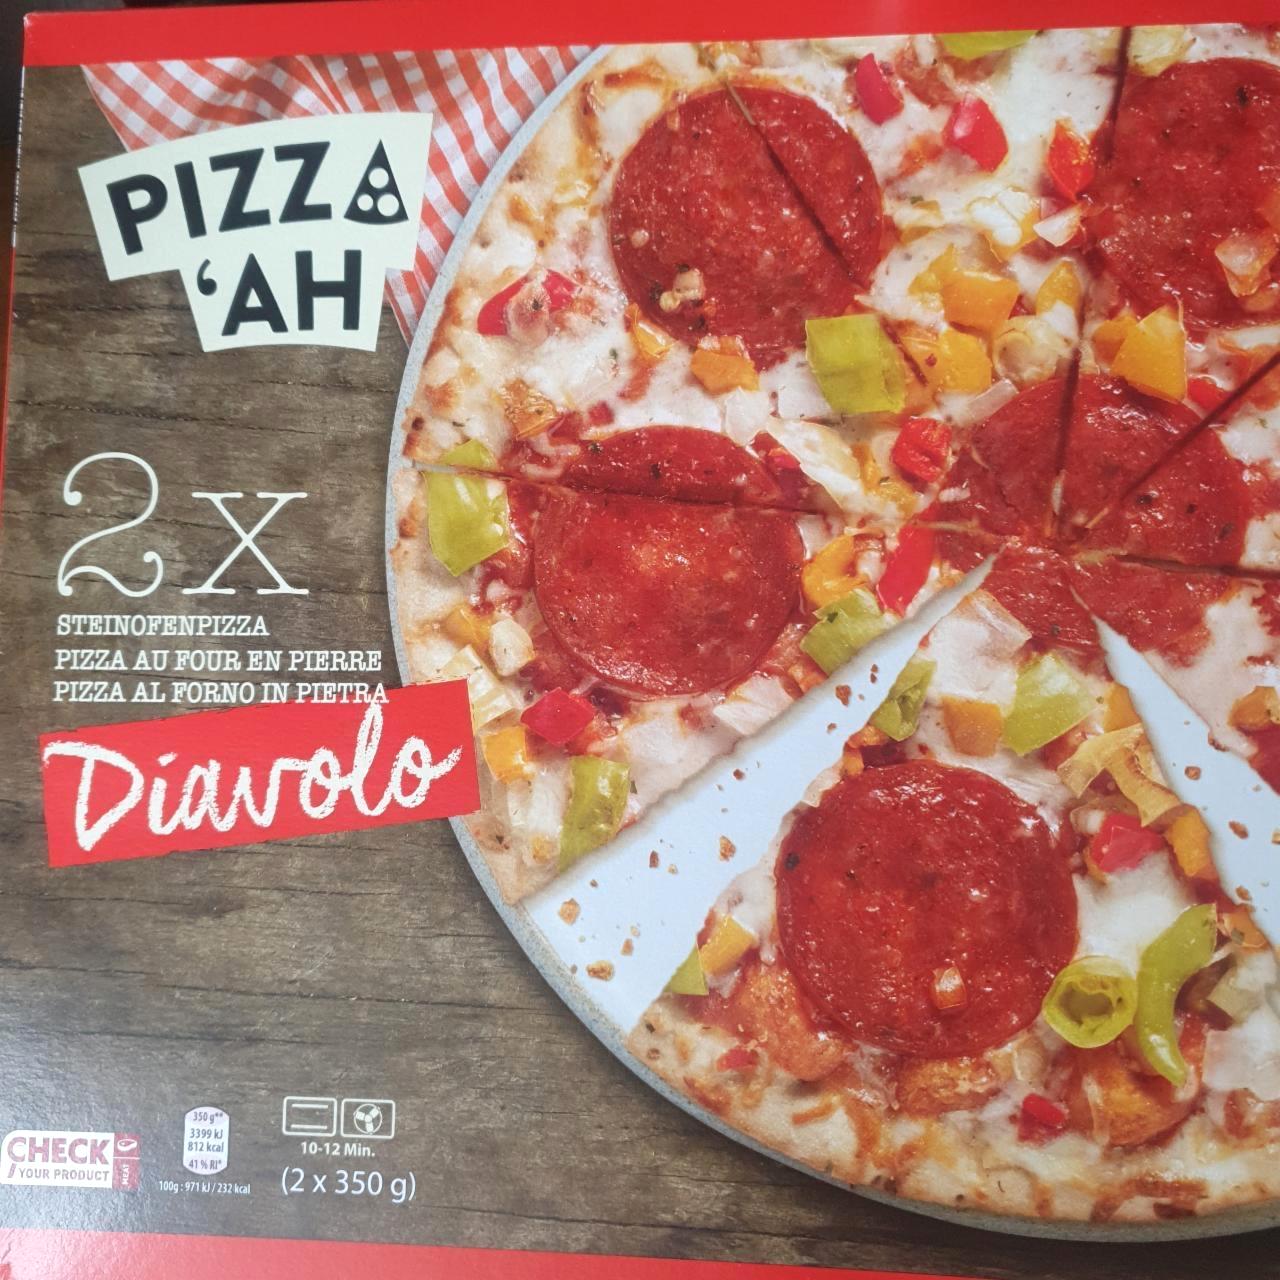 Képek - Pizza'ah Diavolo 2x - Aldi